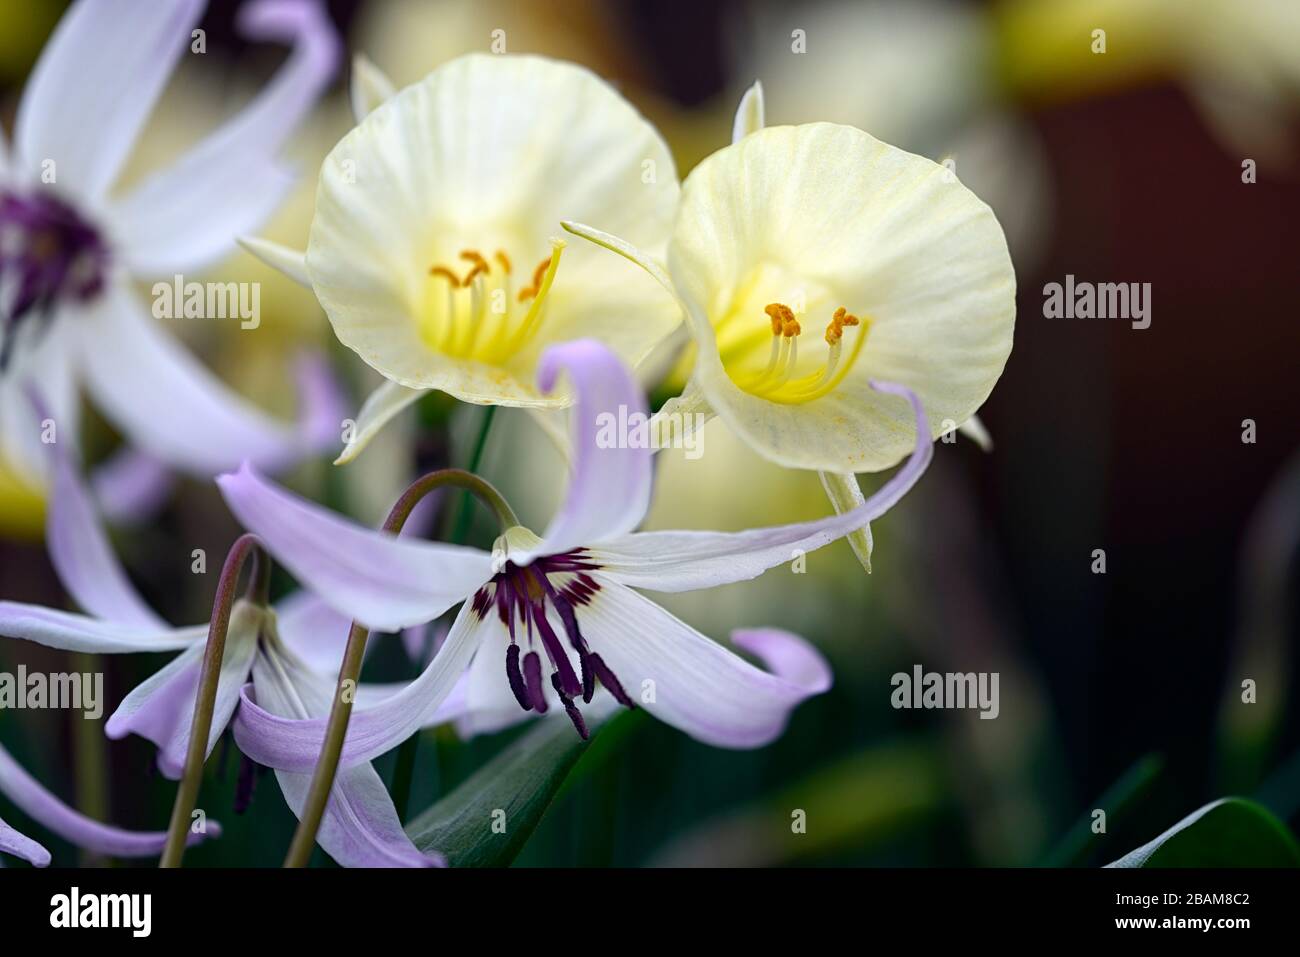 Erythronium Miss Jessop, E A Bowles hybrid,spring,soft pink reflexed flowers,Narcissus bulbocodium Arctic Bells,narcissus,daffodil,daffodils,white pet Stock Photo